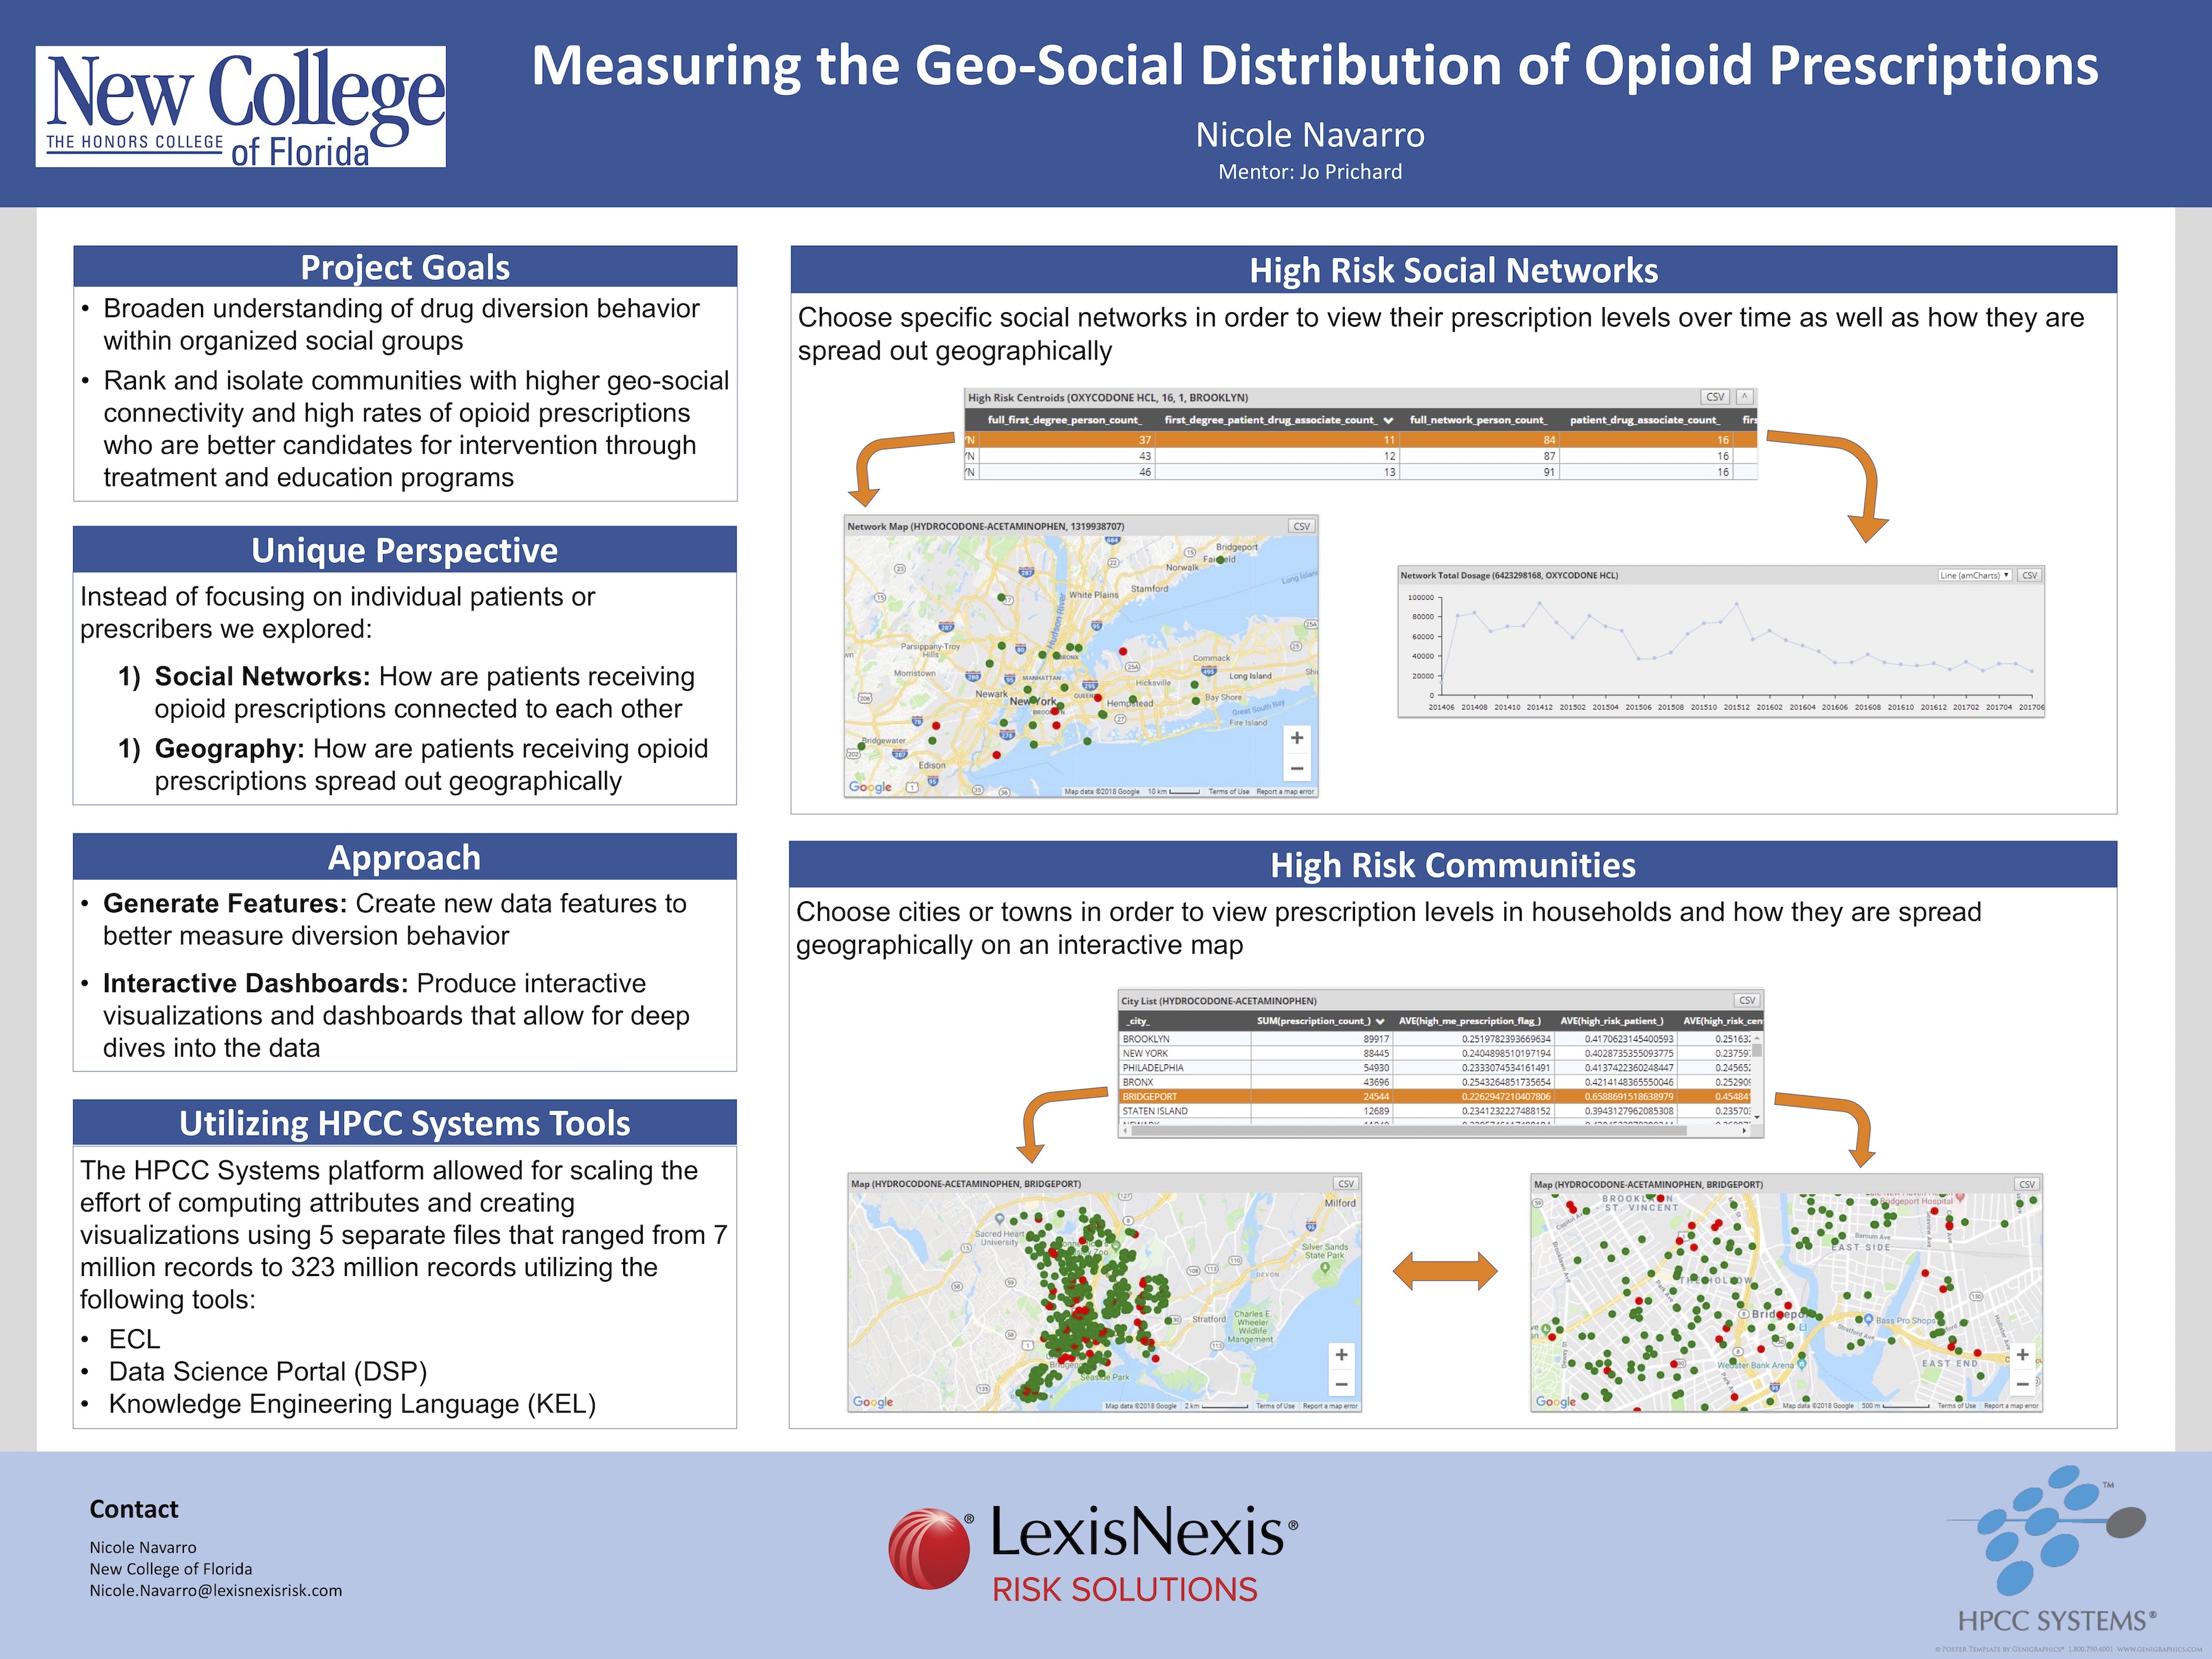 Nicole Navarro - Measuring the geo-social distribution of opioid prescriptions